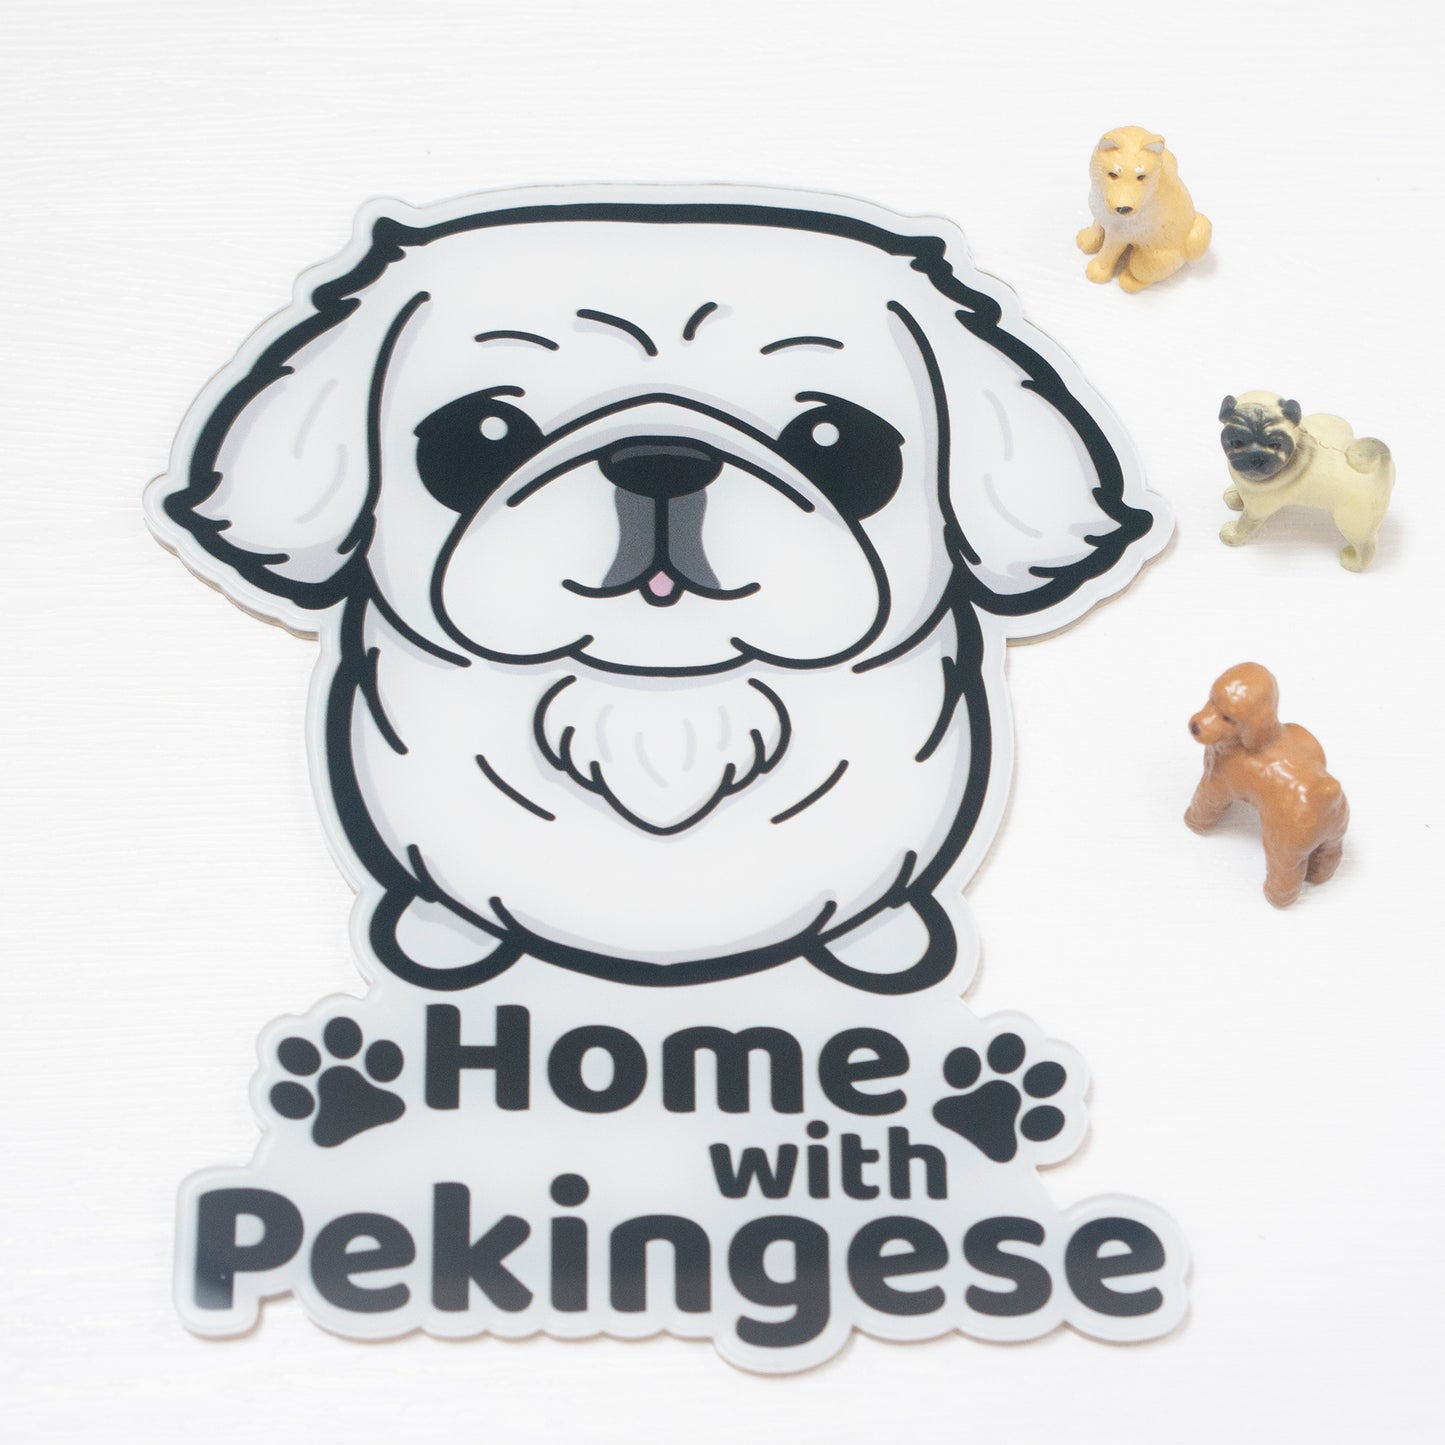 Home with Pekingese